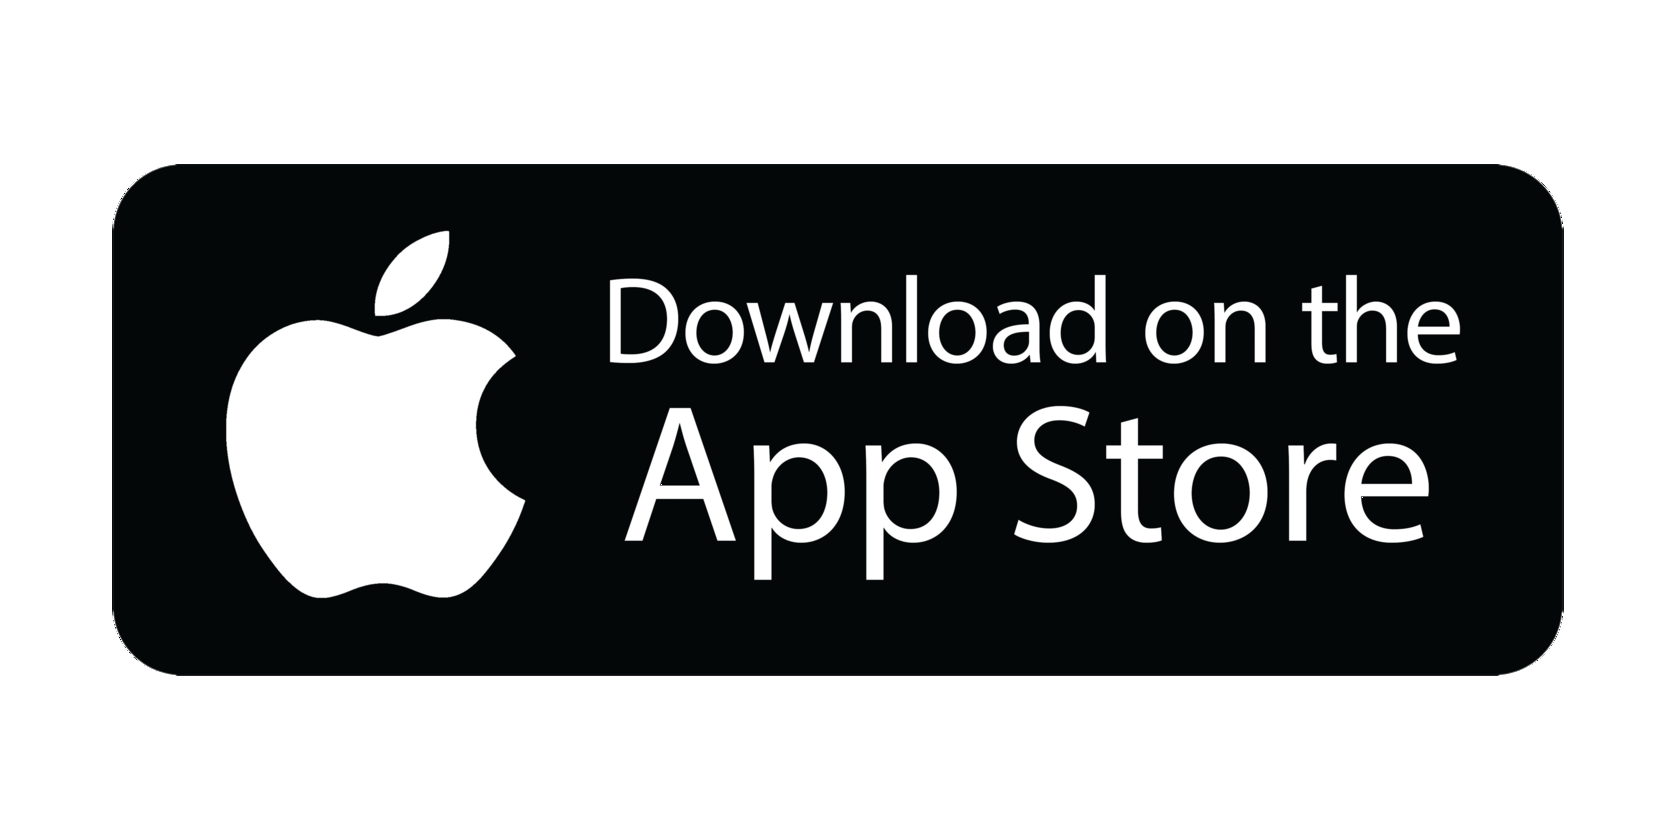 Установить ап стор. Кнопка апстор. Apple Store Google Play. Иконка app Store. Доступно в app Store.